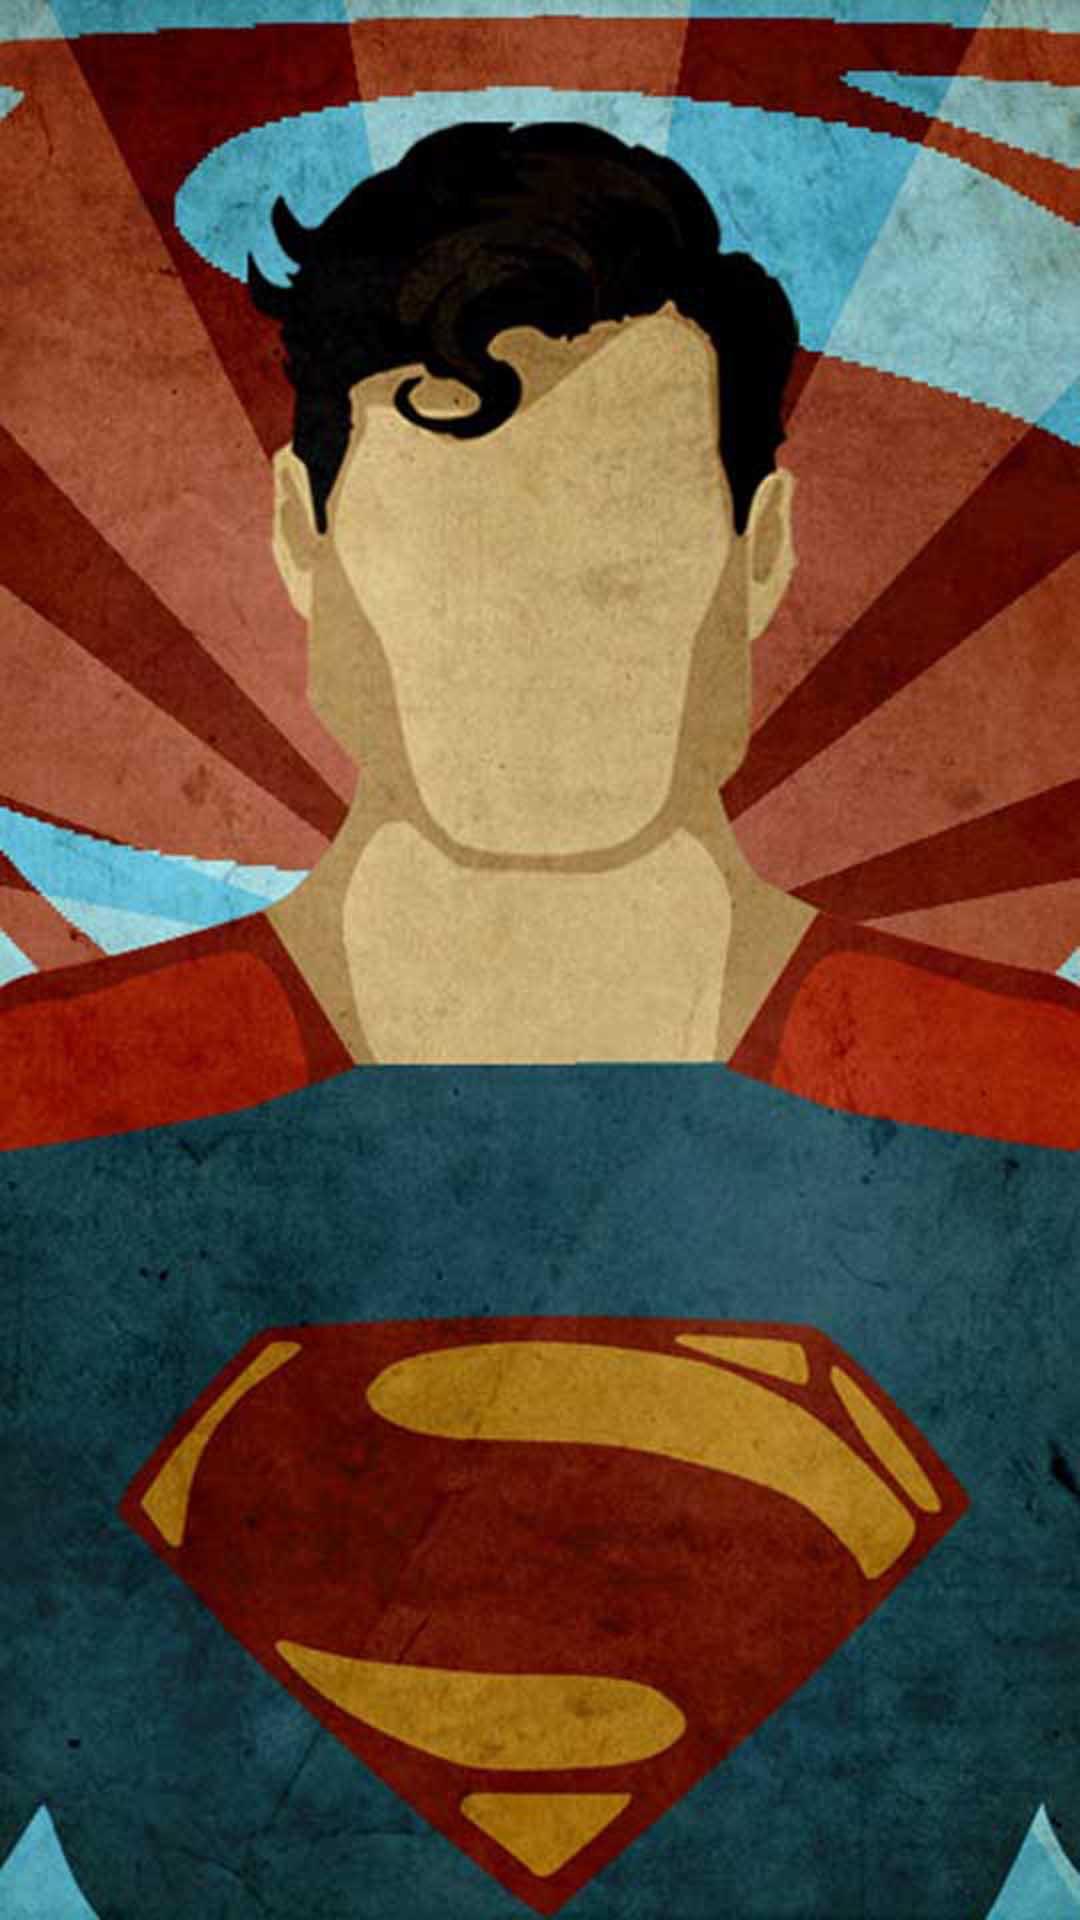 Superman IPhone Wallpaper HD 71 images